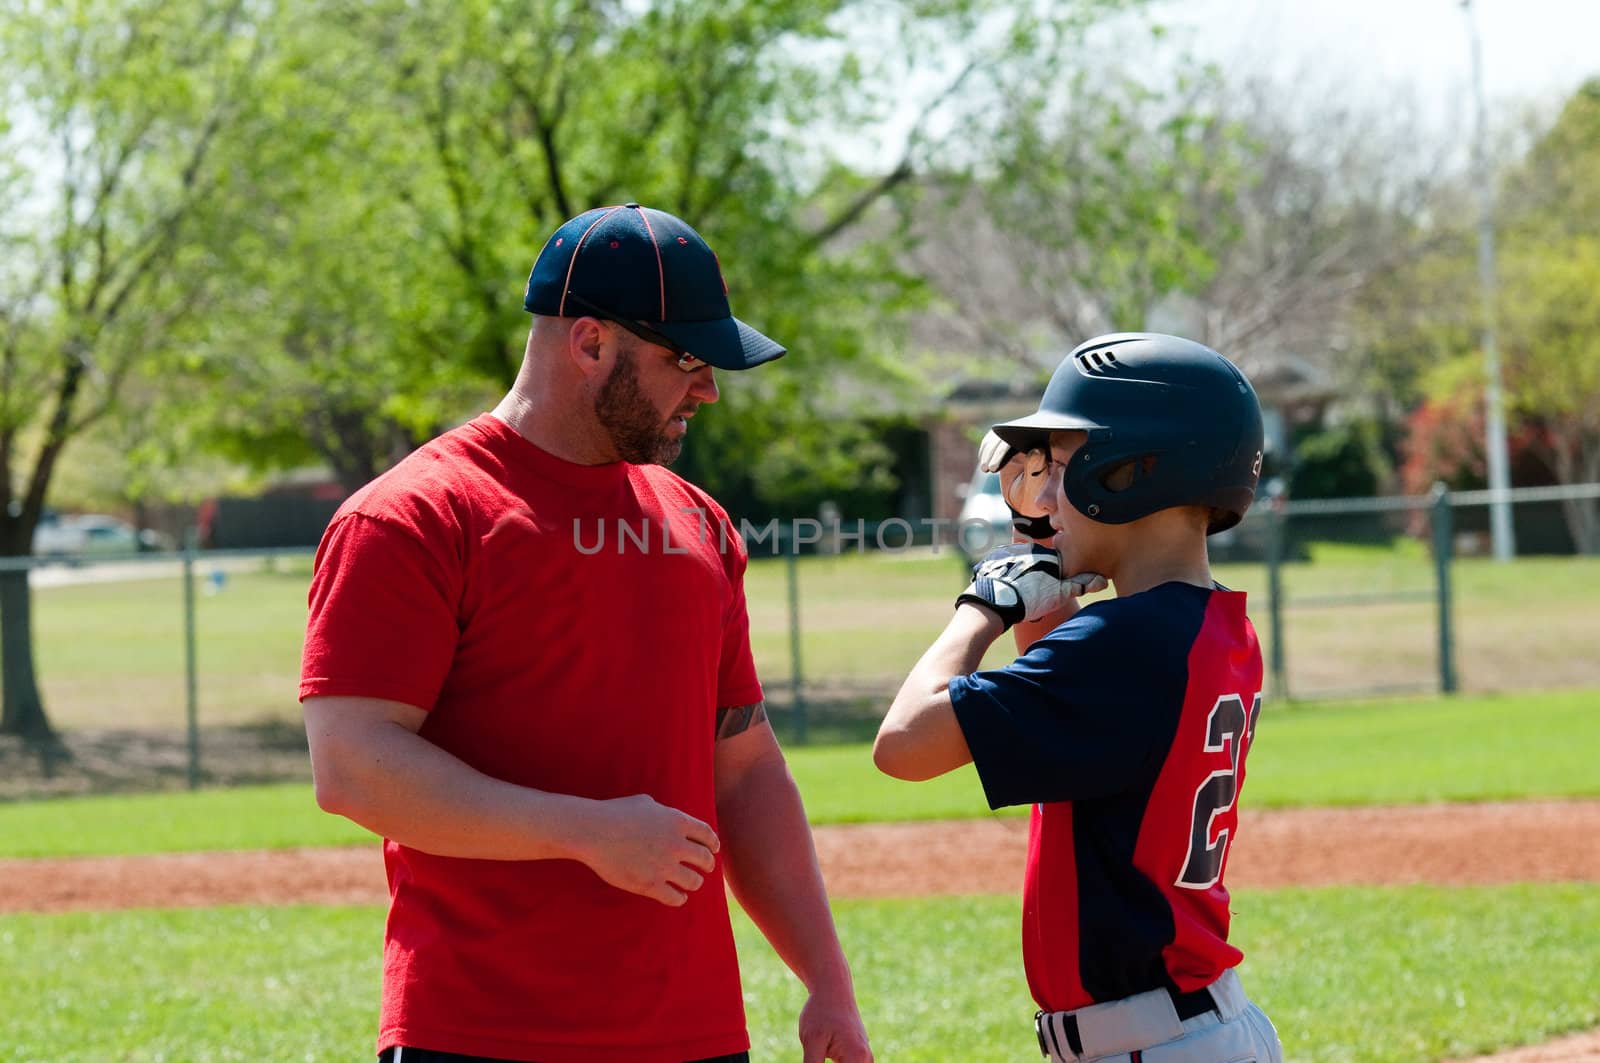 Baseball coach giving instruction to teen baseball boy.